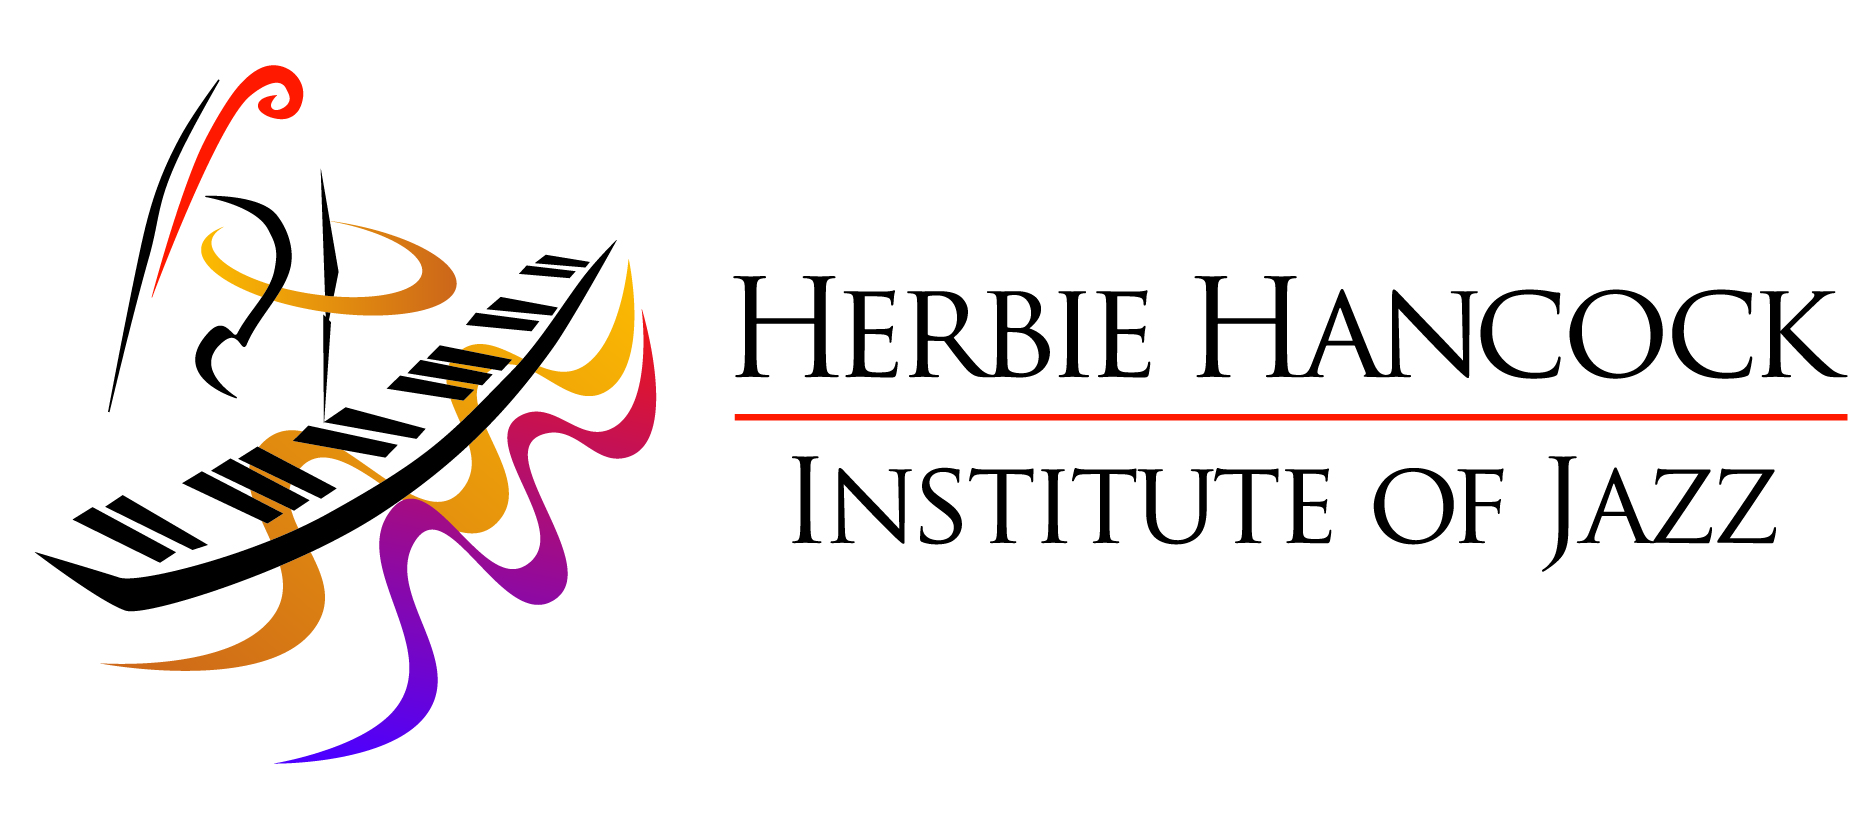 Herbie Hancock Institute of Jazz Performance at the UCLA Herb Alpert School of Music logo